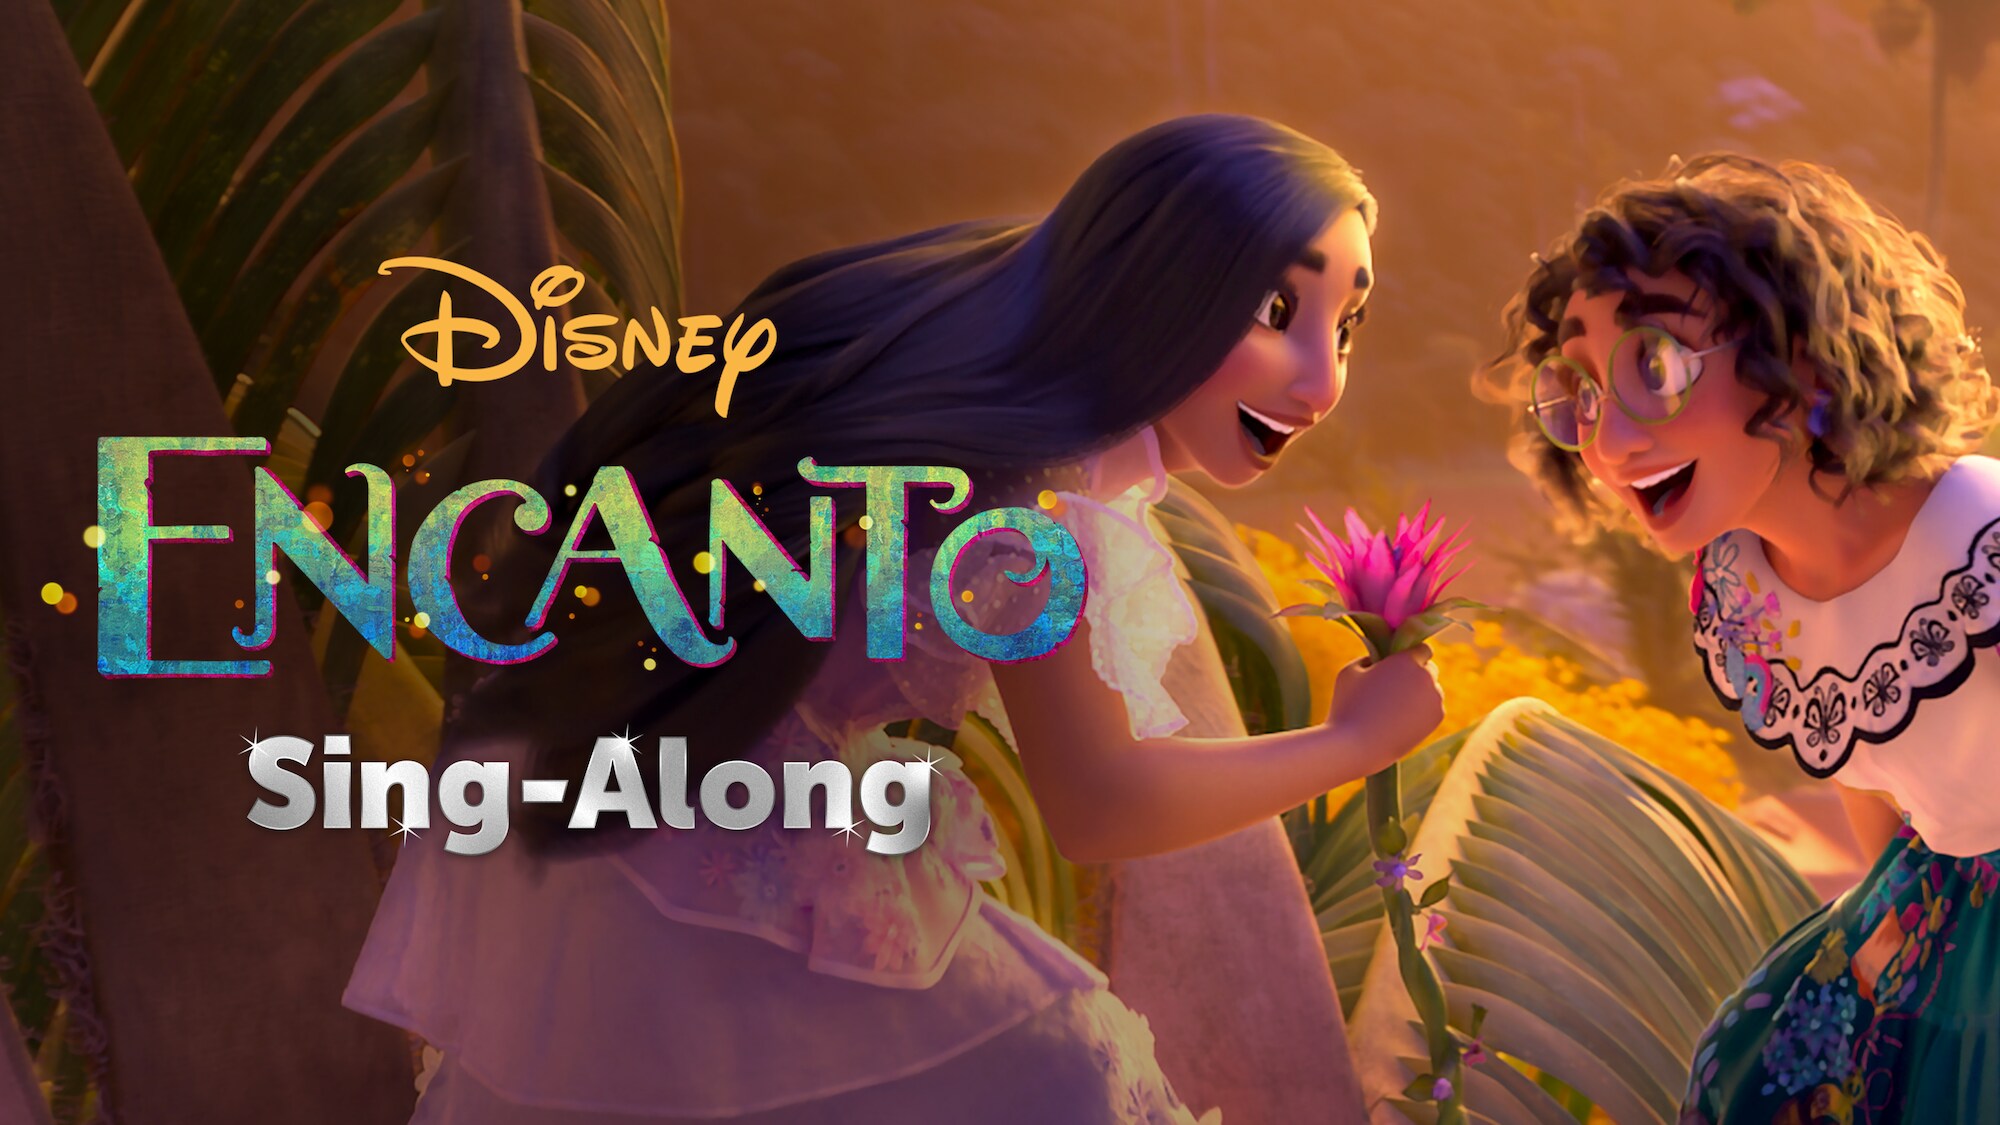 Disney+ To Release Sing-Along Versions Of Fan-Favorite Musicals, Beginning With Walt Disney Animation Studios’ Bafta Award-Winning Film “Encanto” This Friday